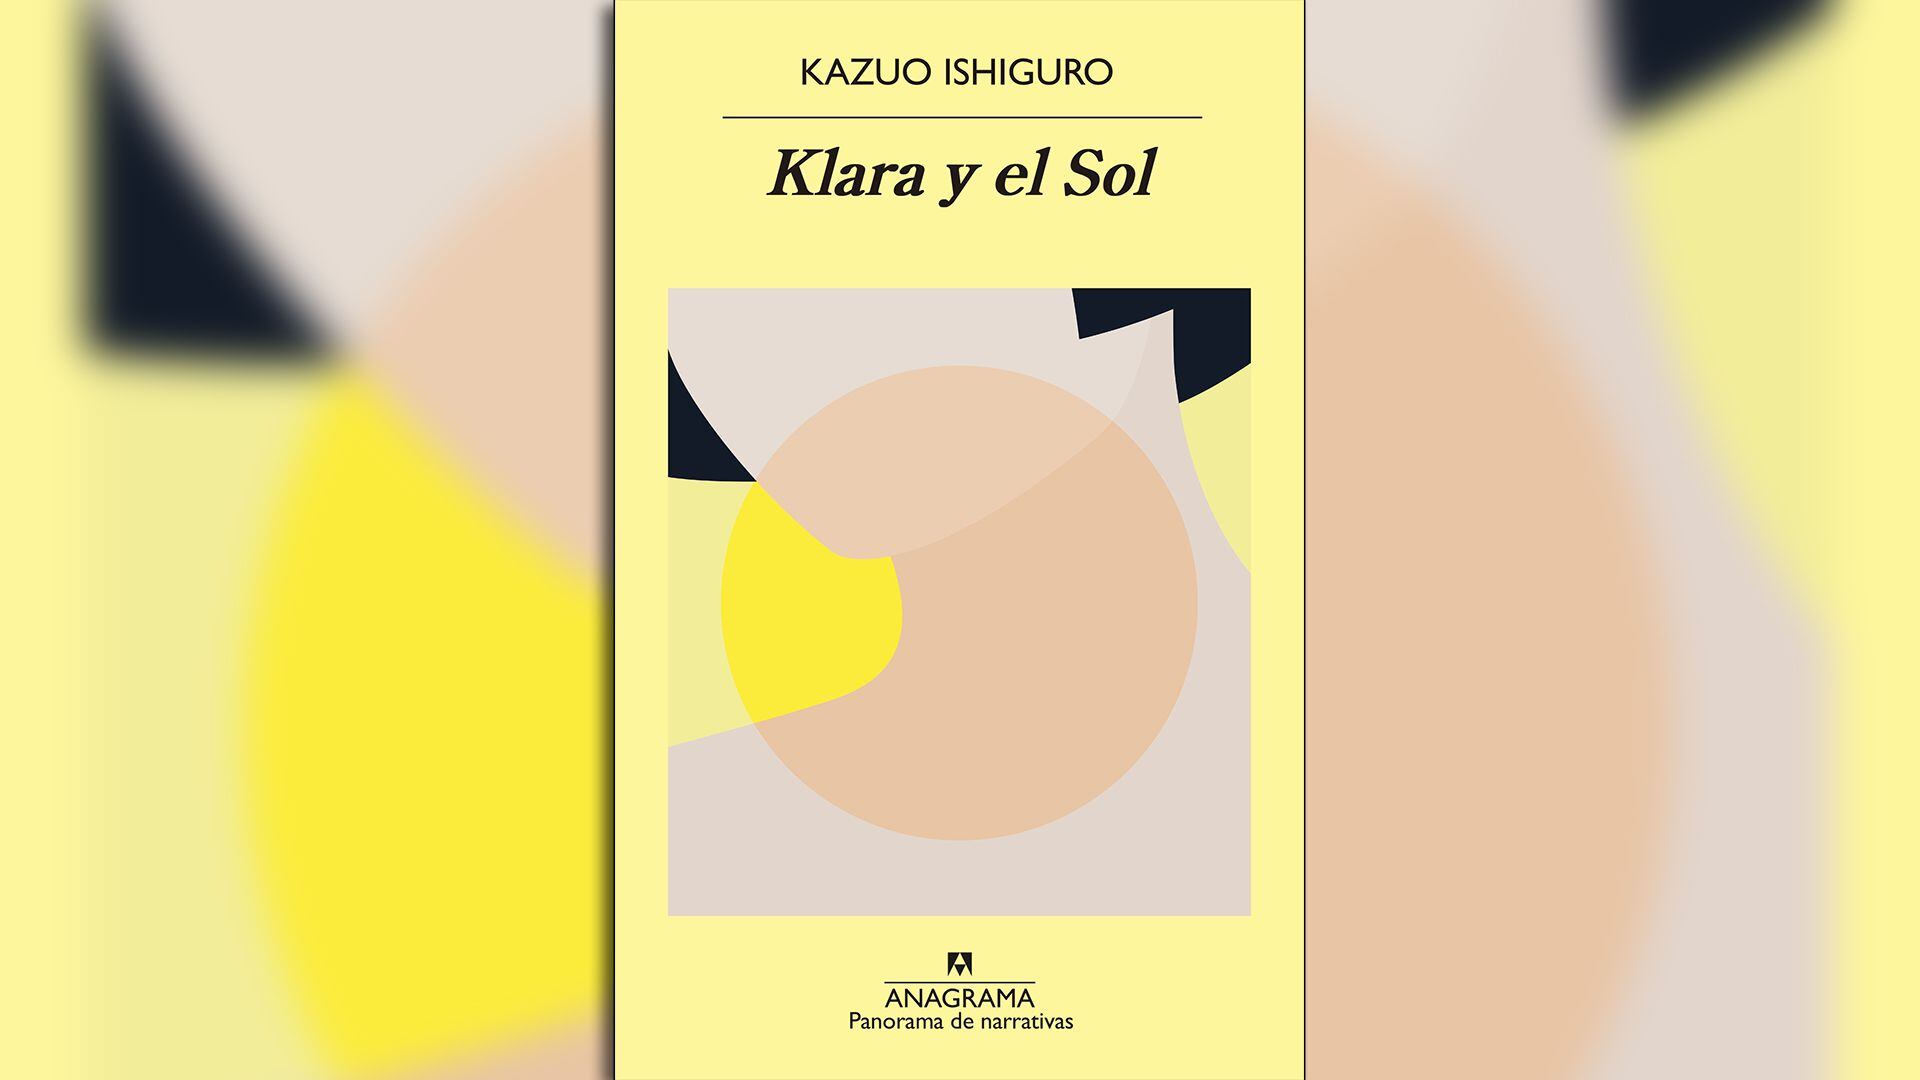 Kazuo Ishiguro Klara and the sun